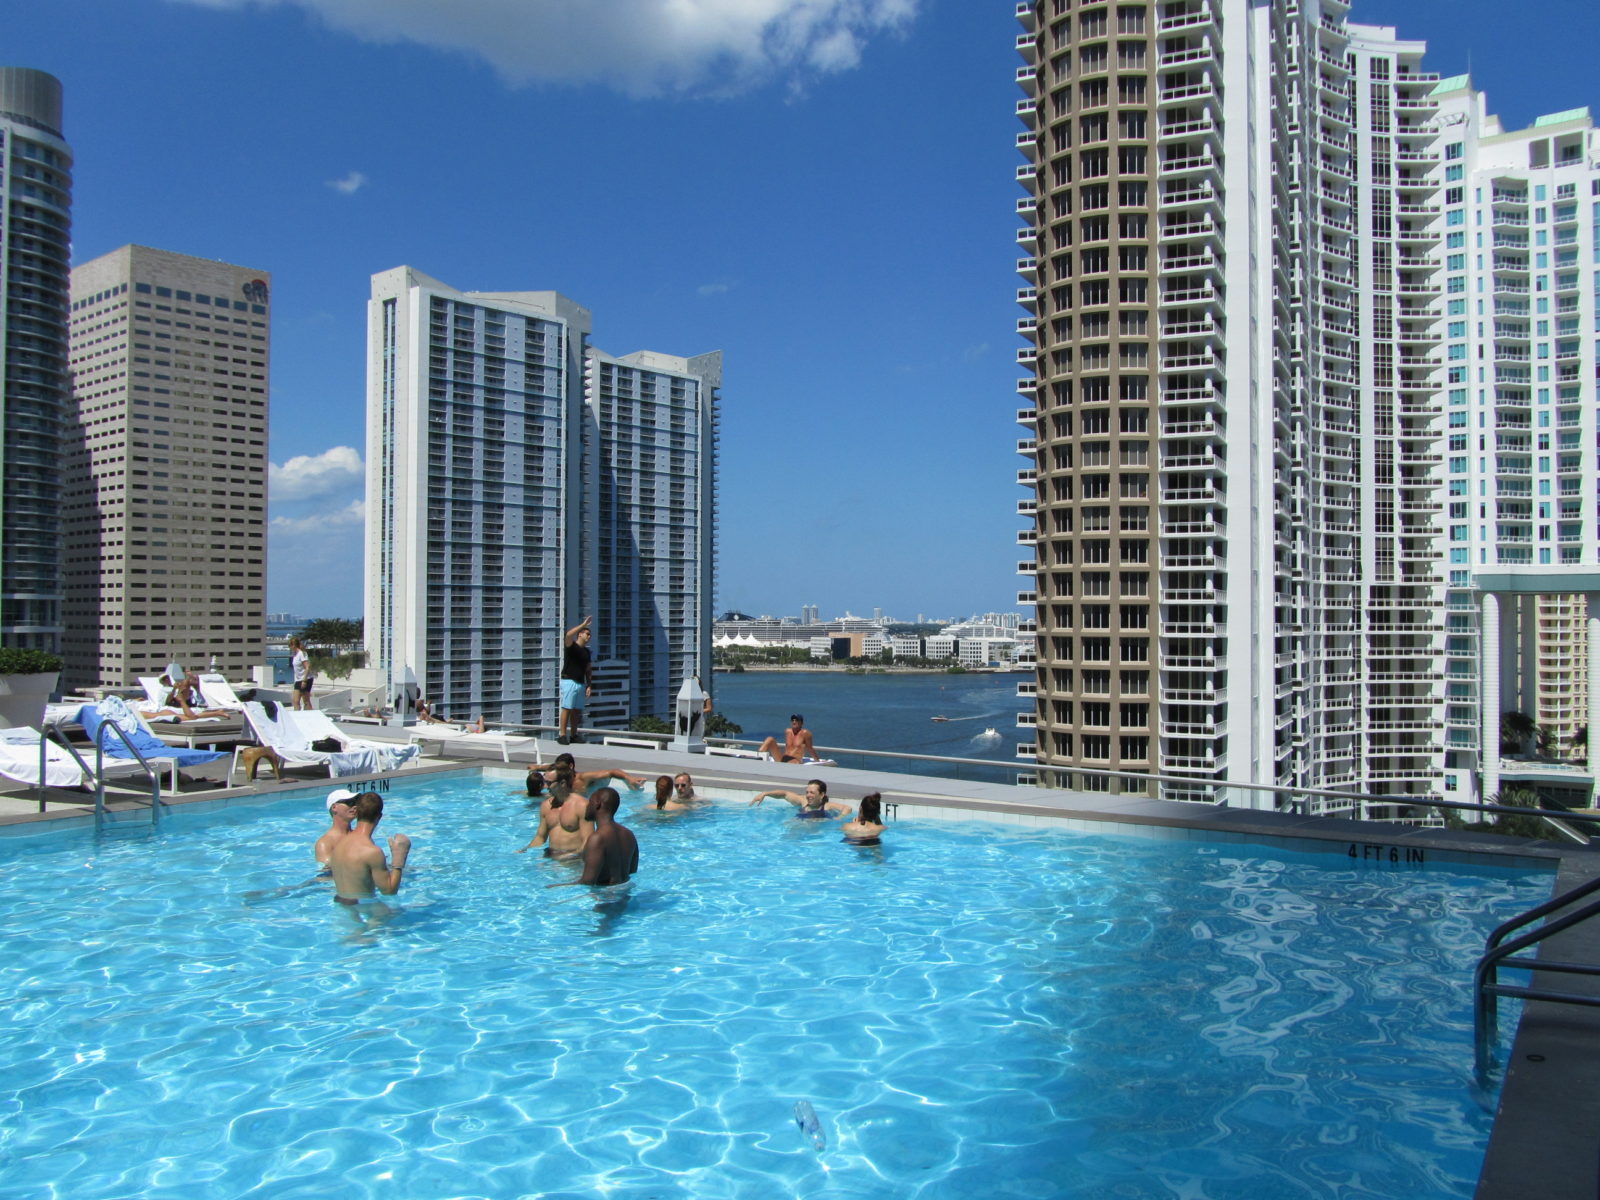 Viceroy Hotel Miami5 1600x1200 